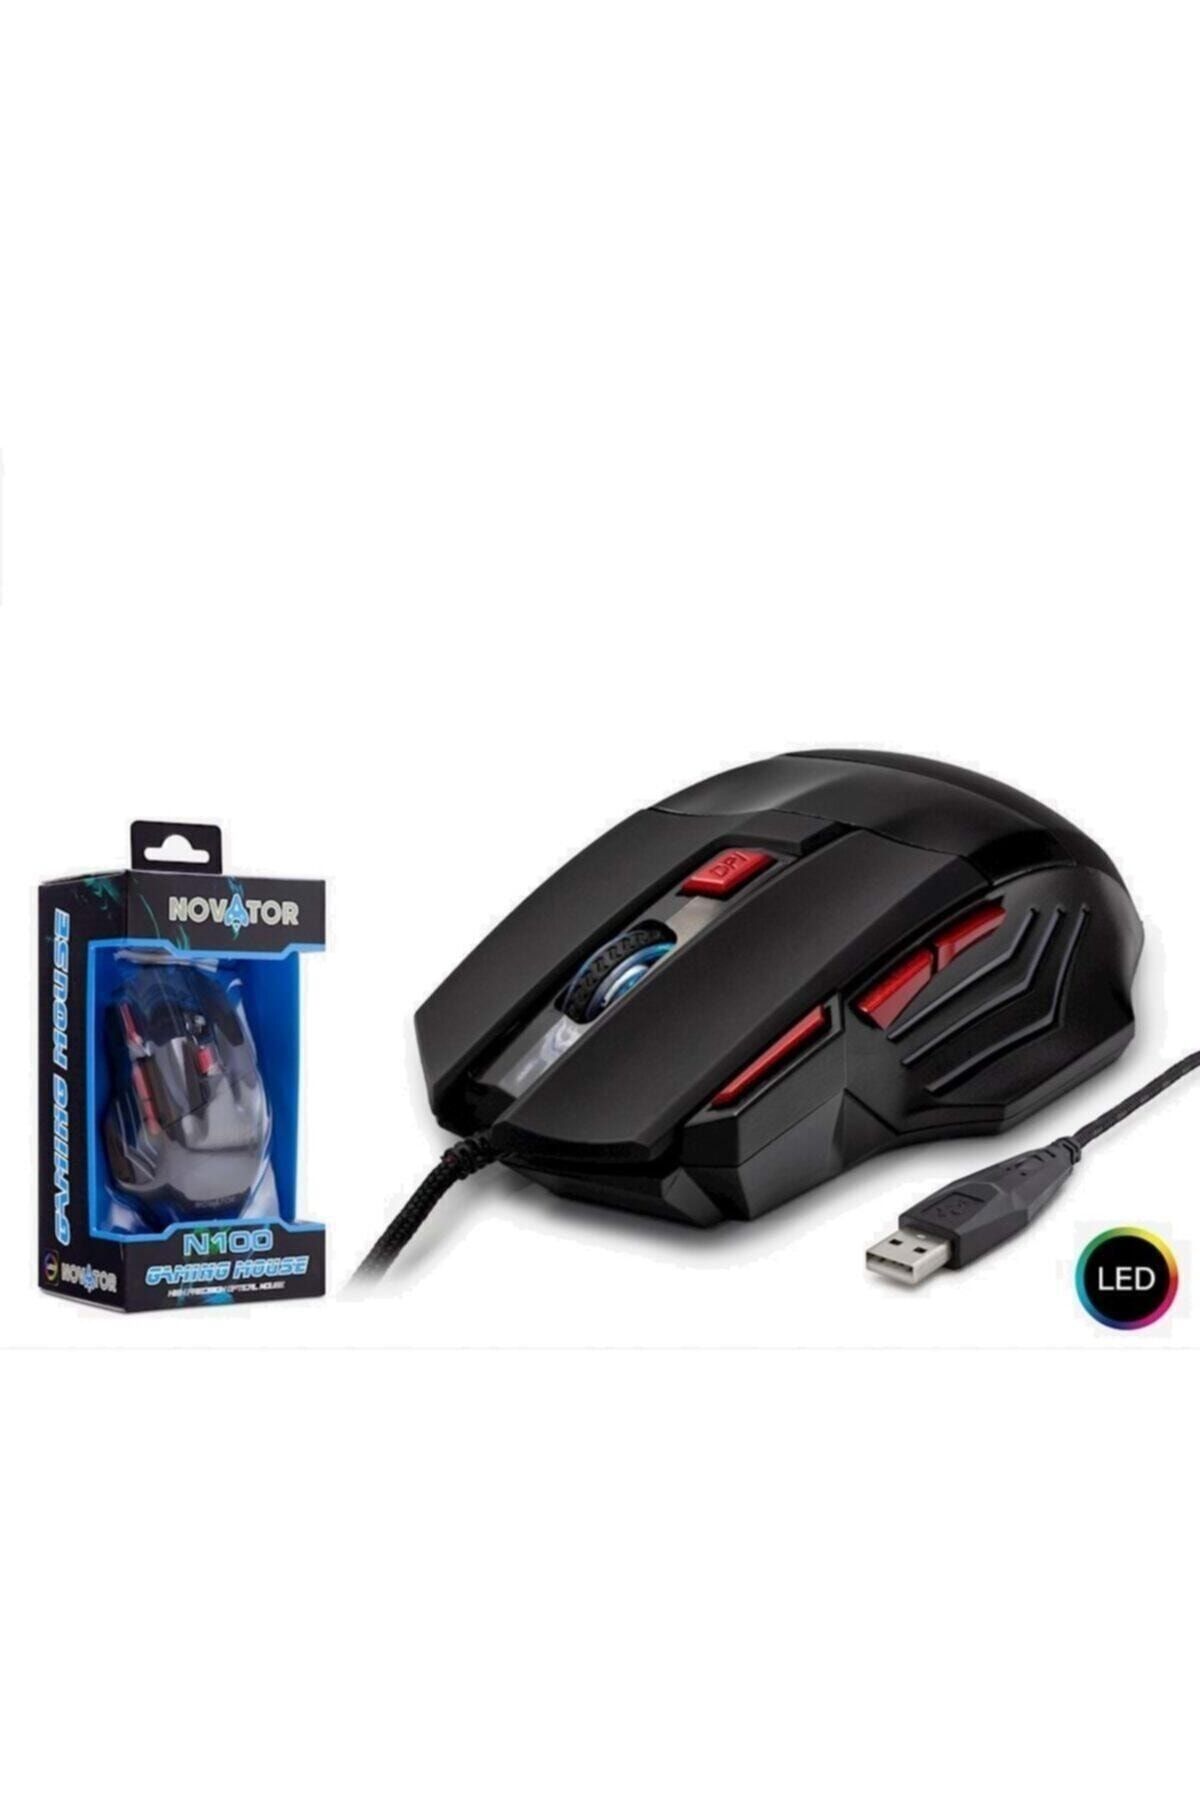 HADRON Novator N100/50 Oyun Mouse Ledli Gaming Mouse